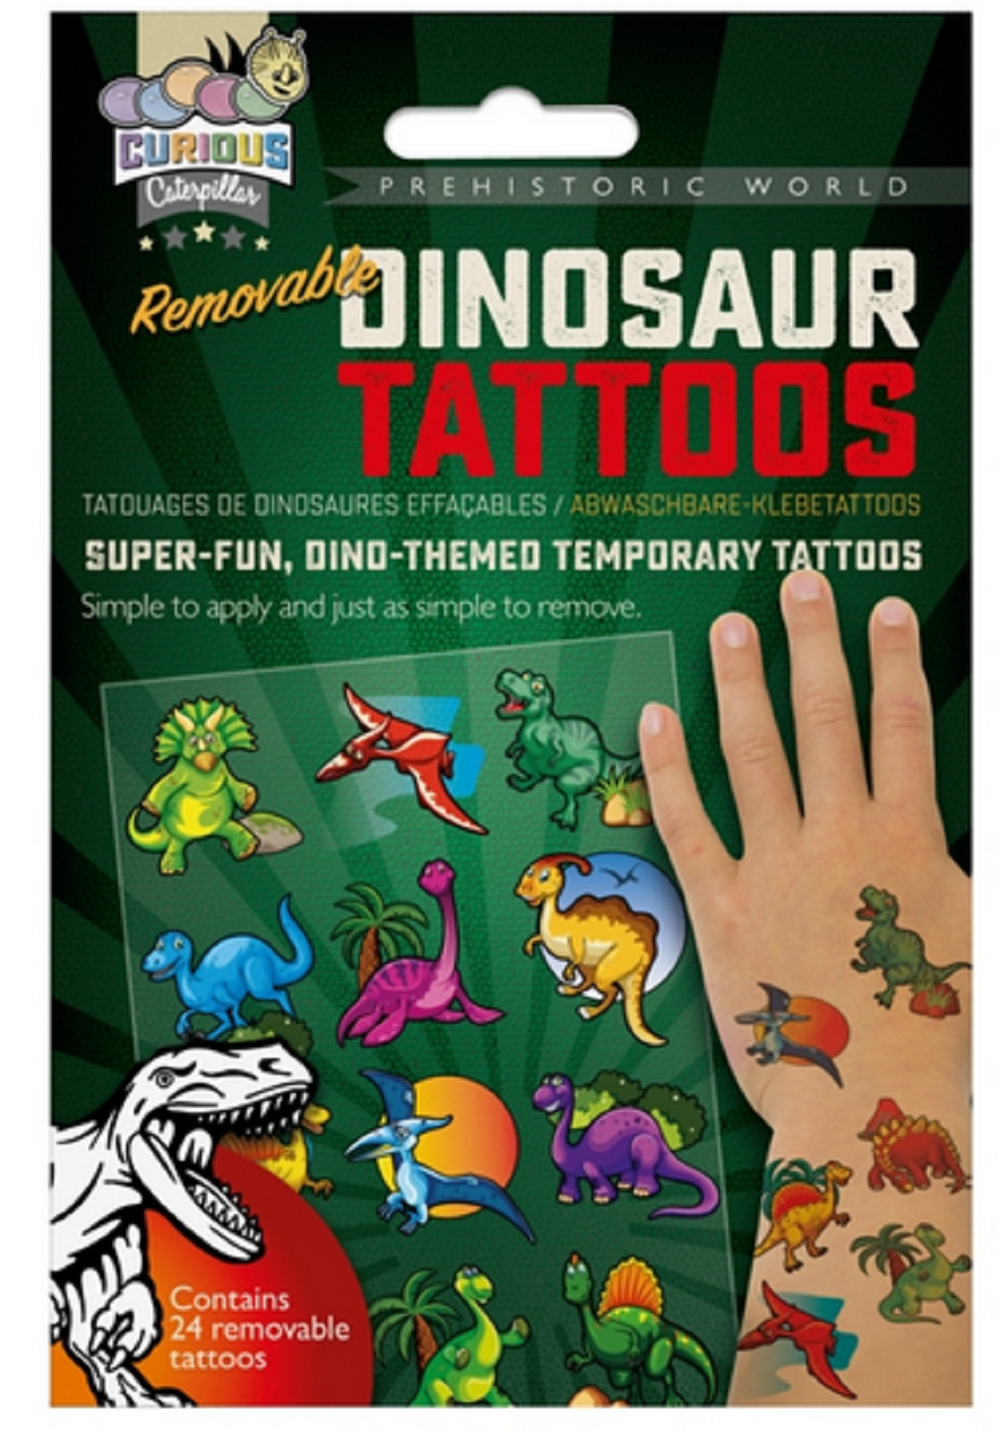 Removable Dinosaur Tattoos